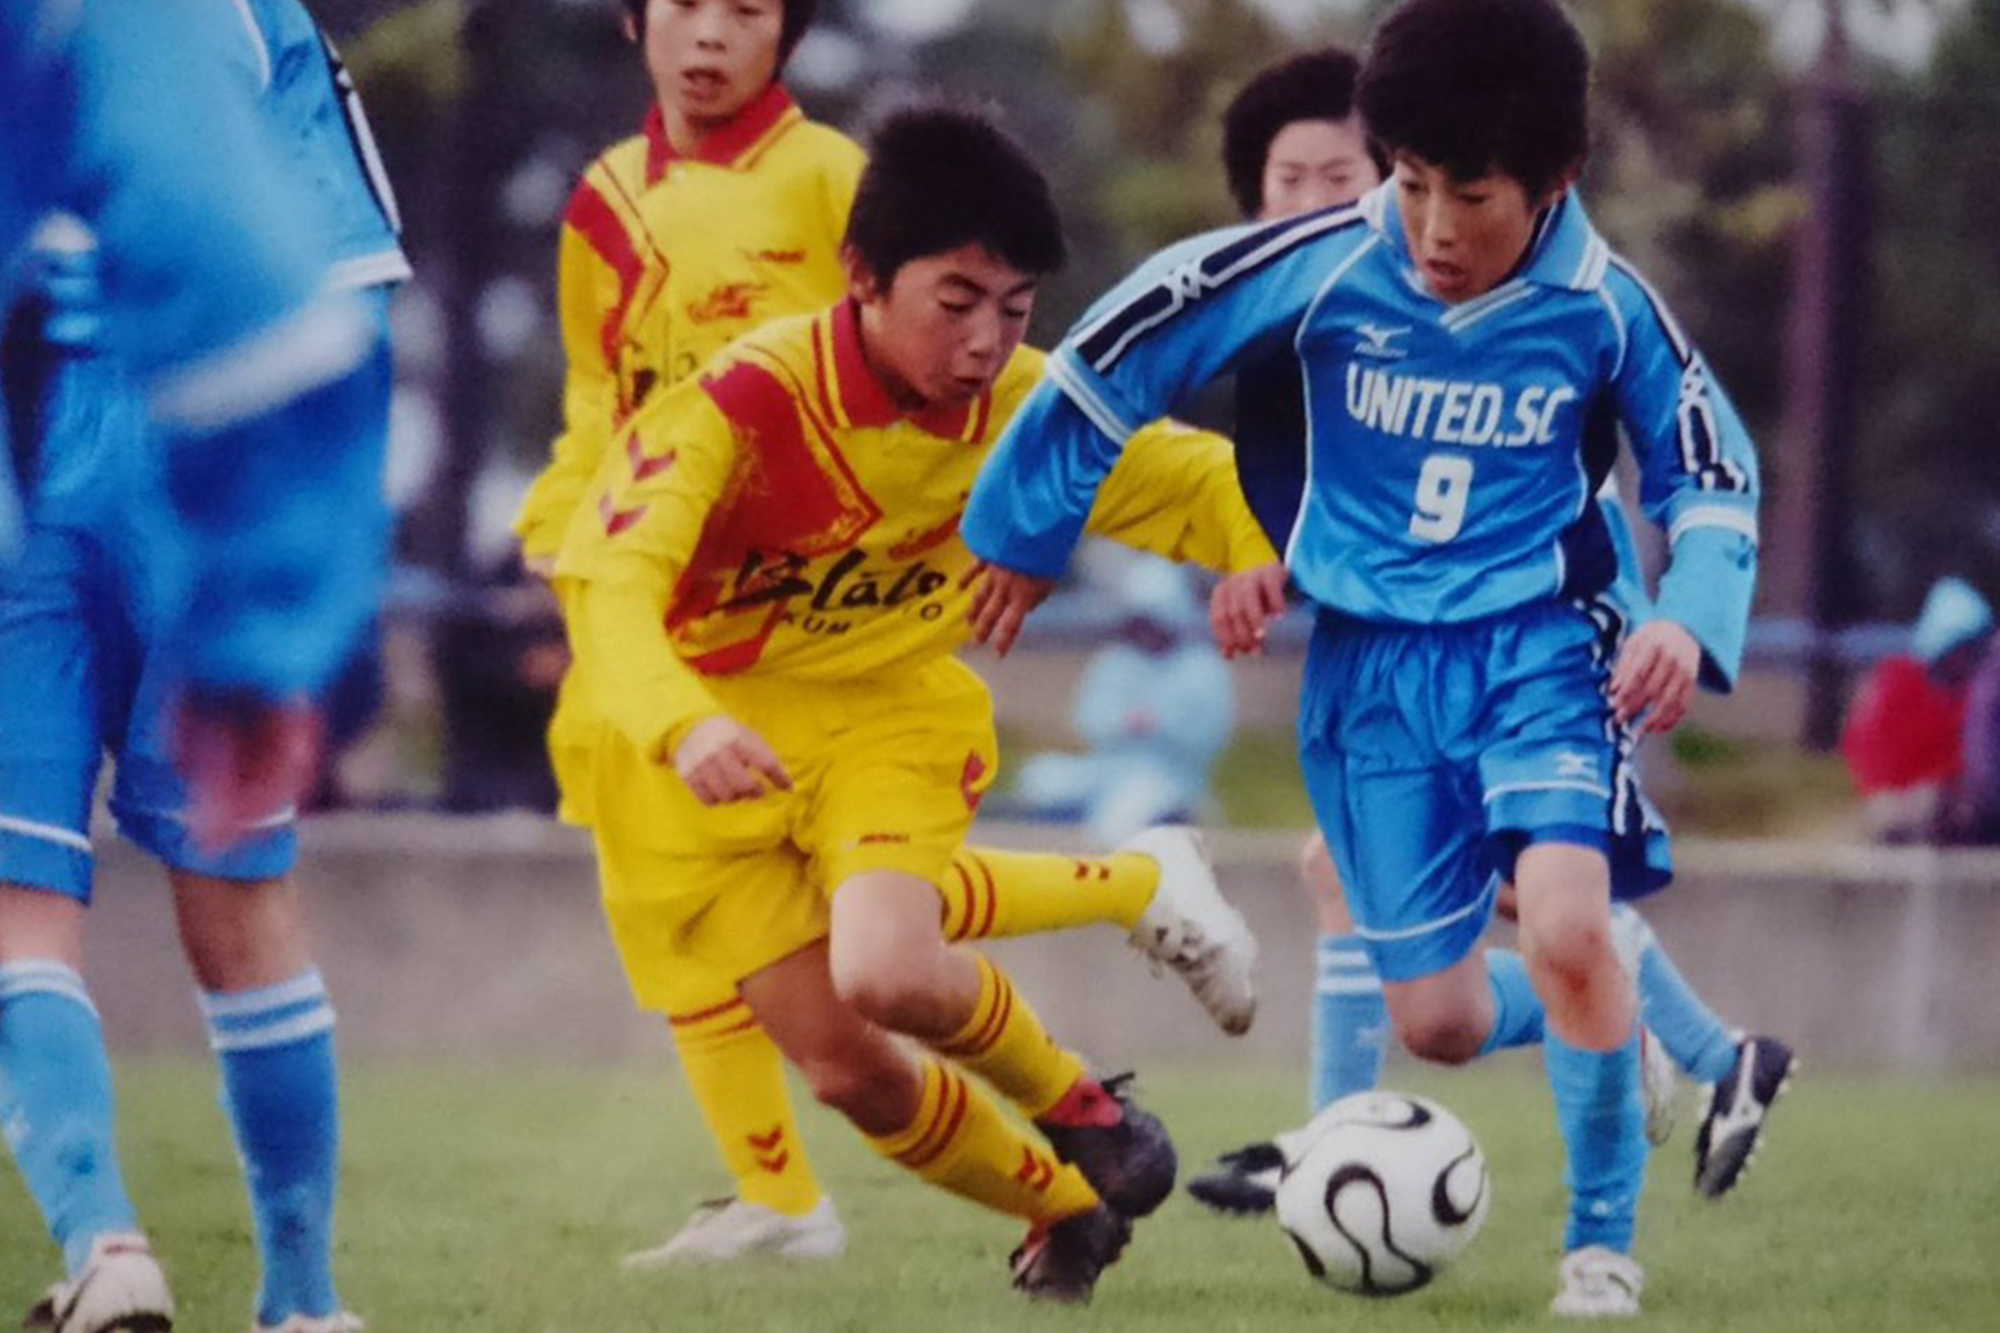 Vol 3 Kasオイペン Fw豊川雄太 Reibola 新しいサッカーメディア